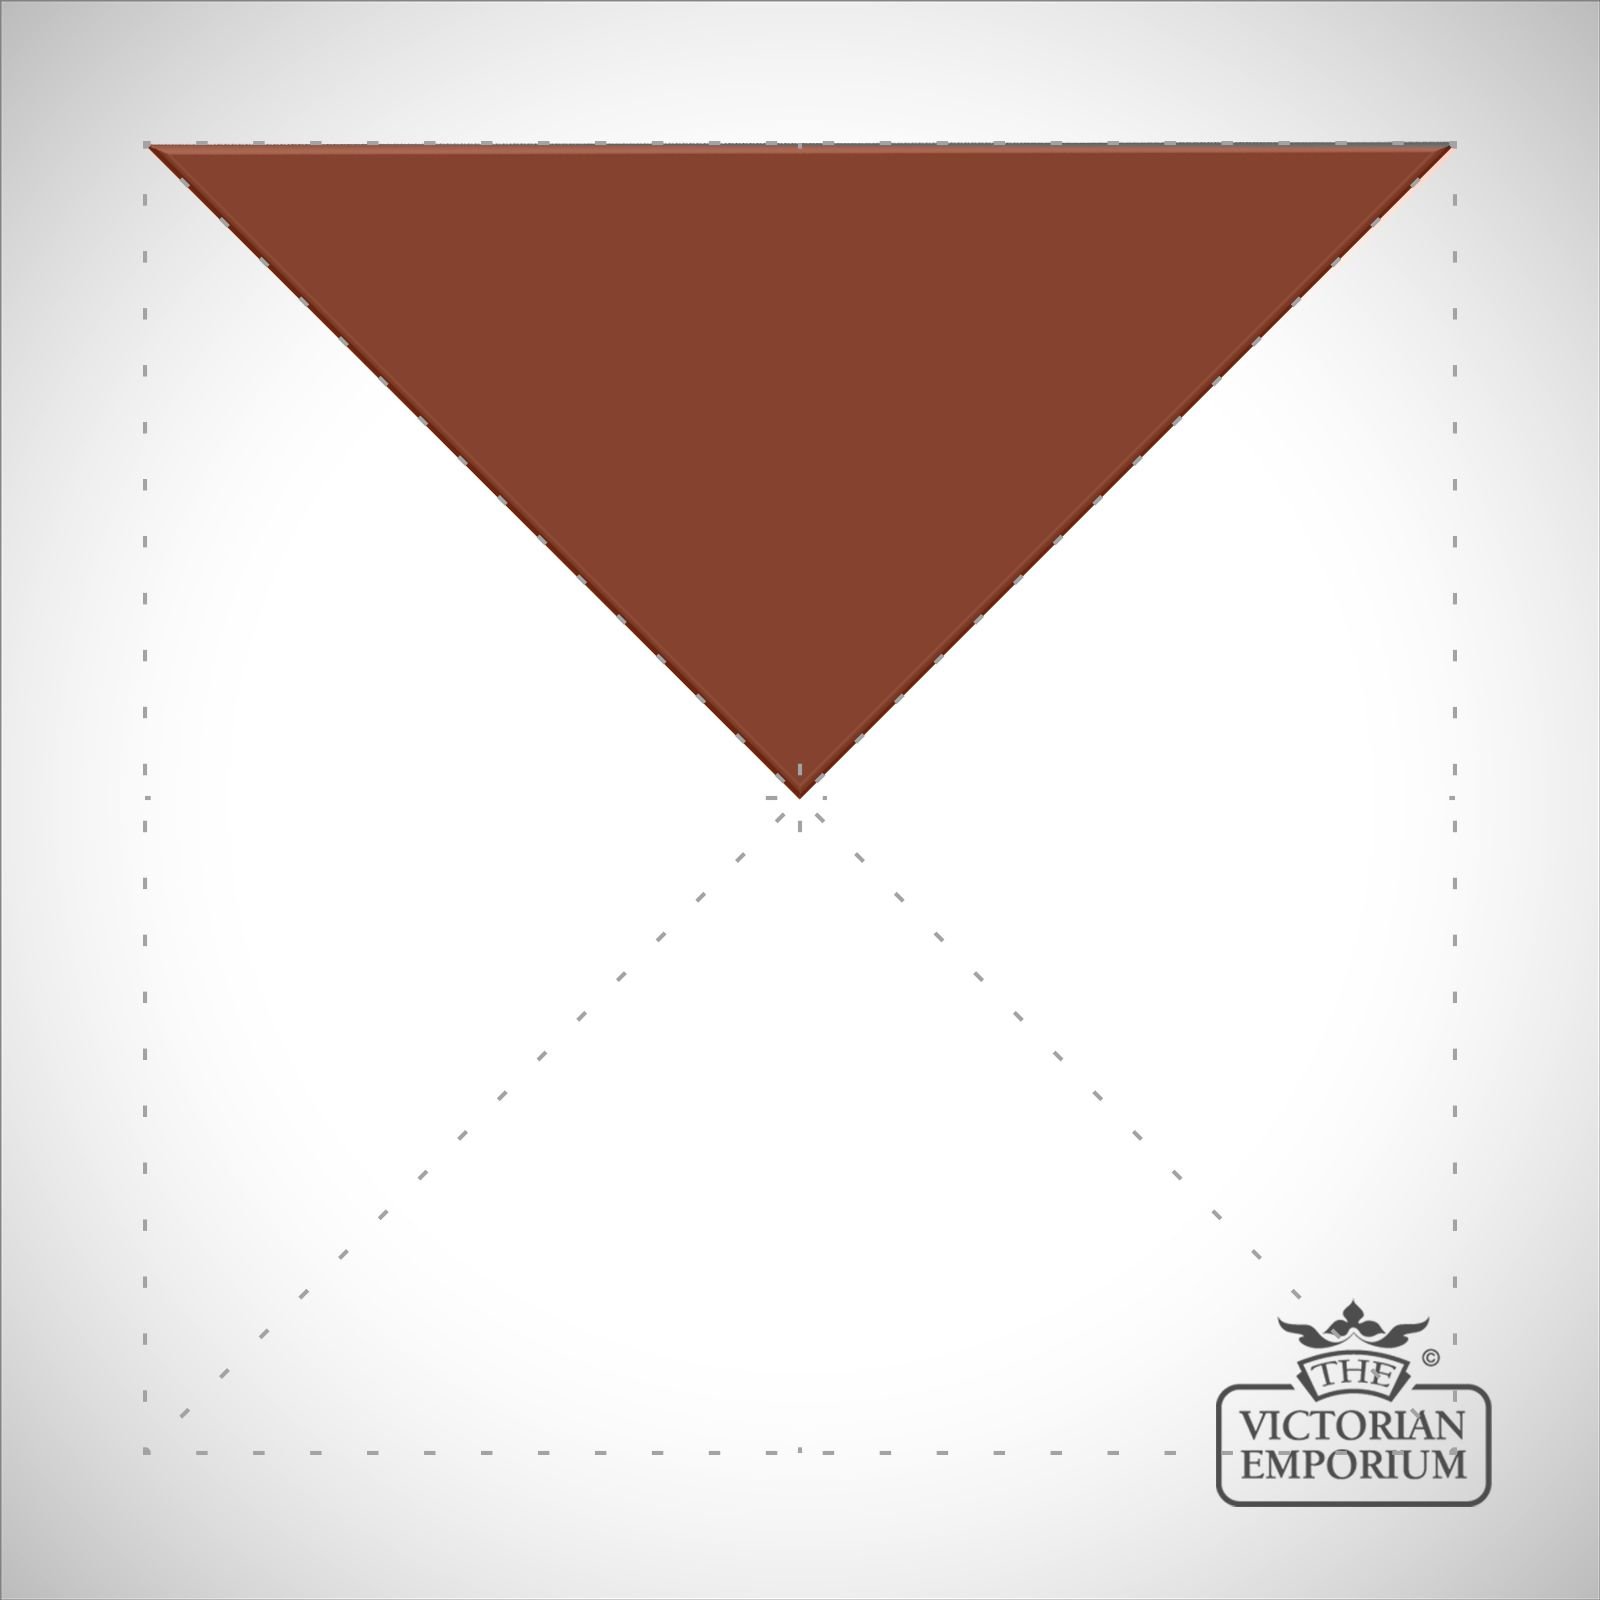 Red Triangle/Quarter square tiles